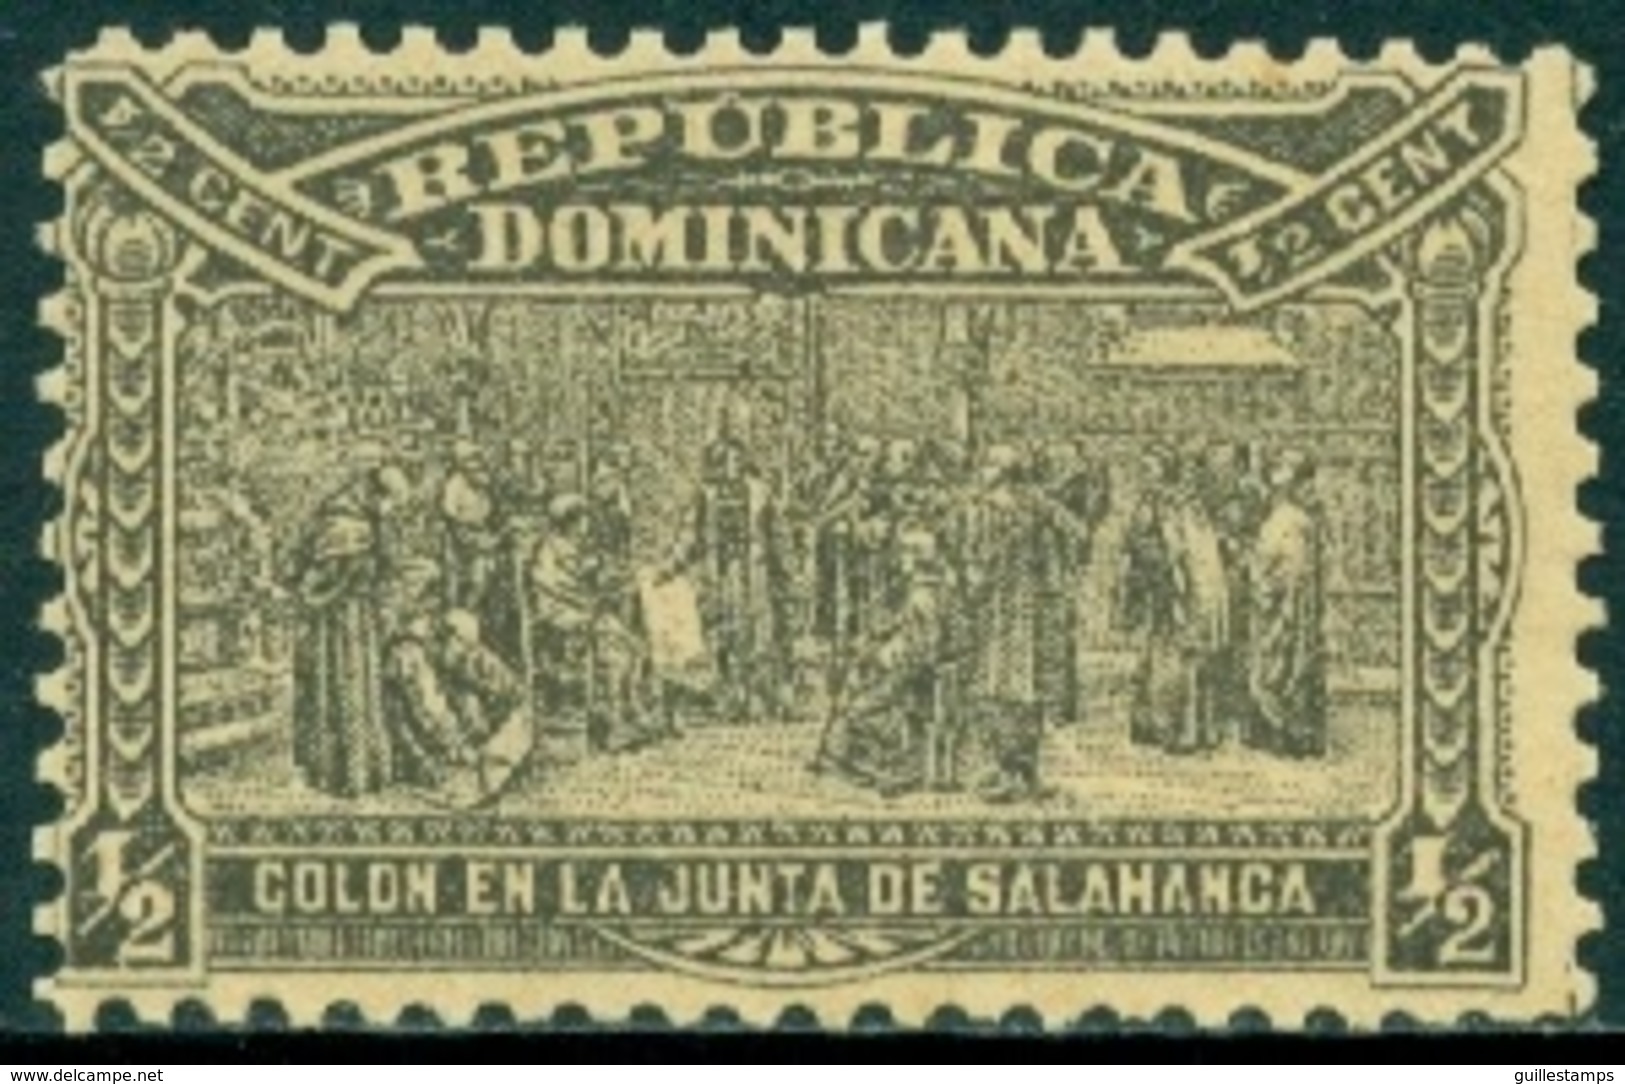 DOMINICAN REPUBLIC 1900 DISCOVERY OF AMERICA, 1/2c COLUMBUS AT SALAMANCA** (MNH) - Dominican Republic